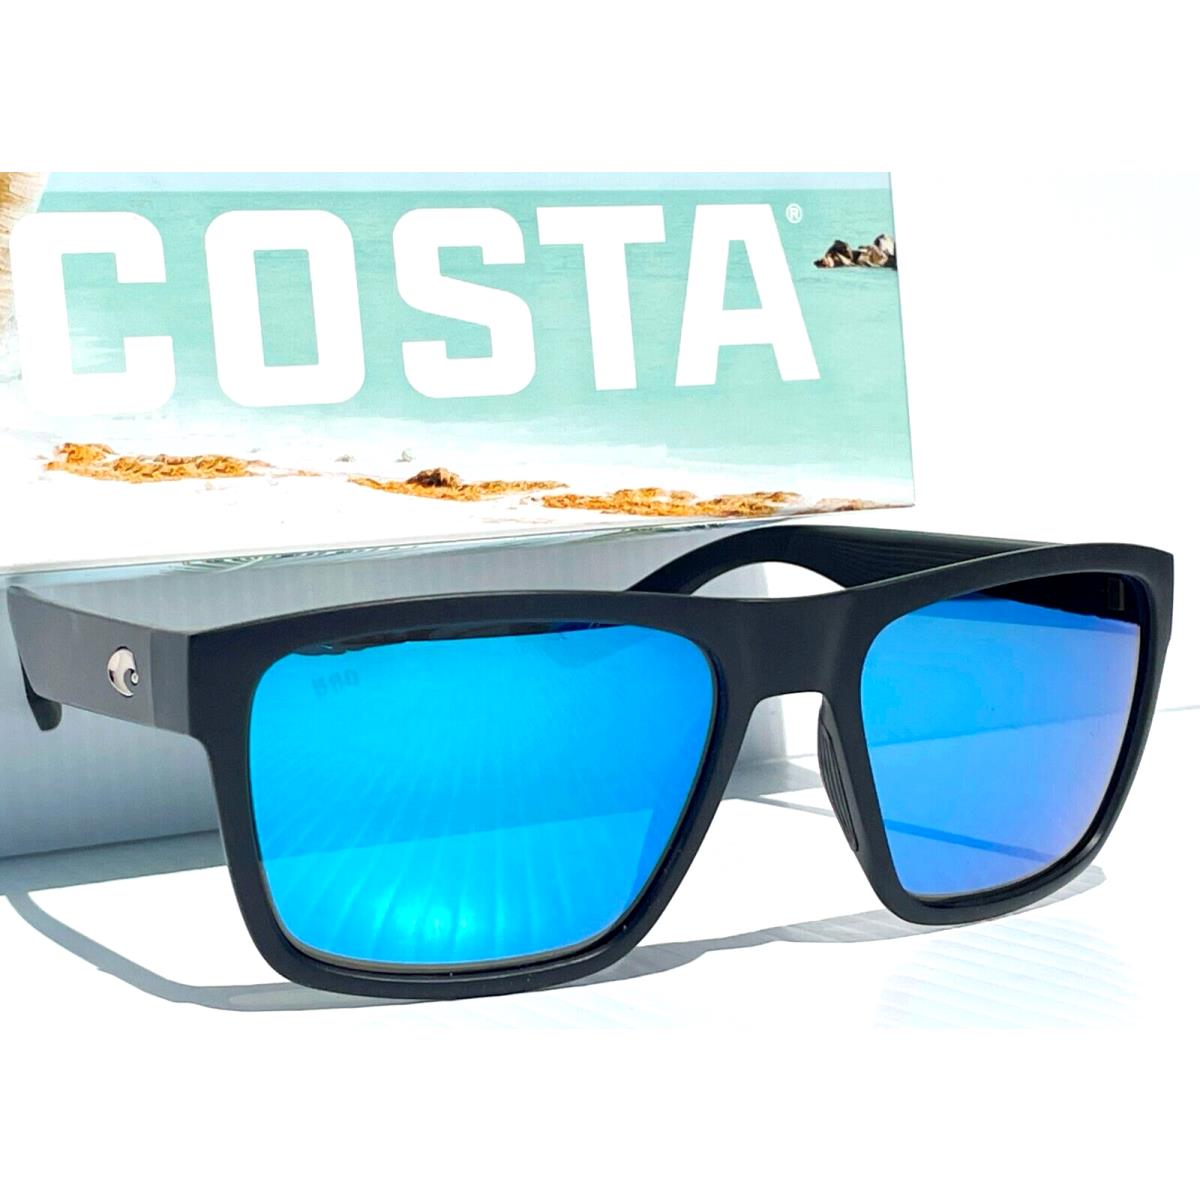 Costa Del Mar Paunch XL Matte Black Polarized Blue 580G Glass Sunglass 905001 - Frame: Black, Lens: Blue